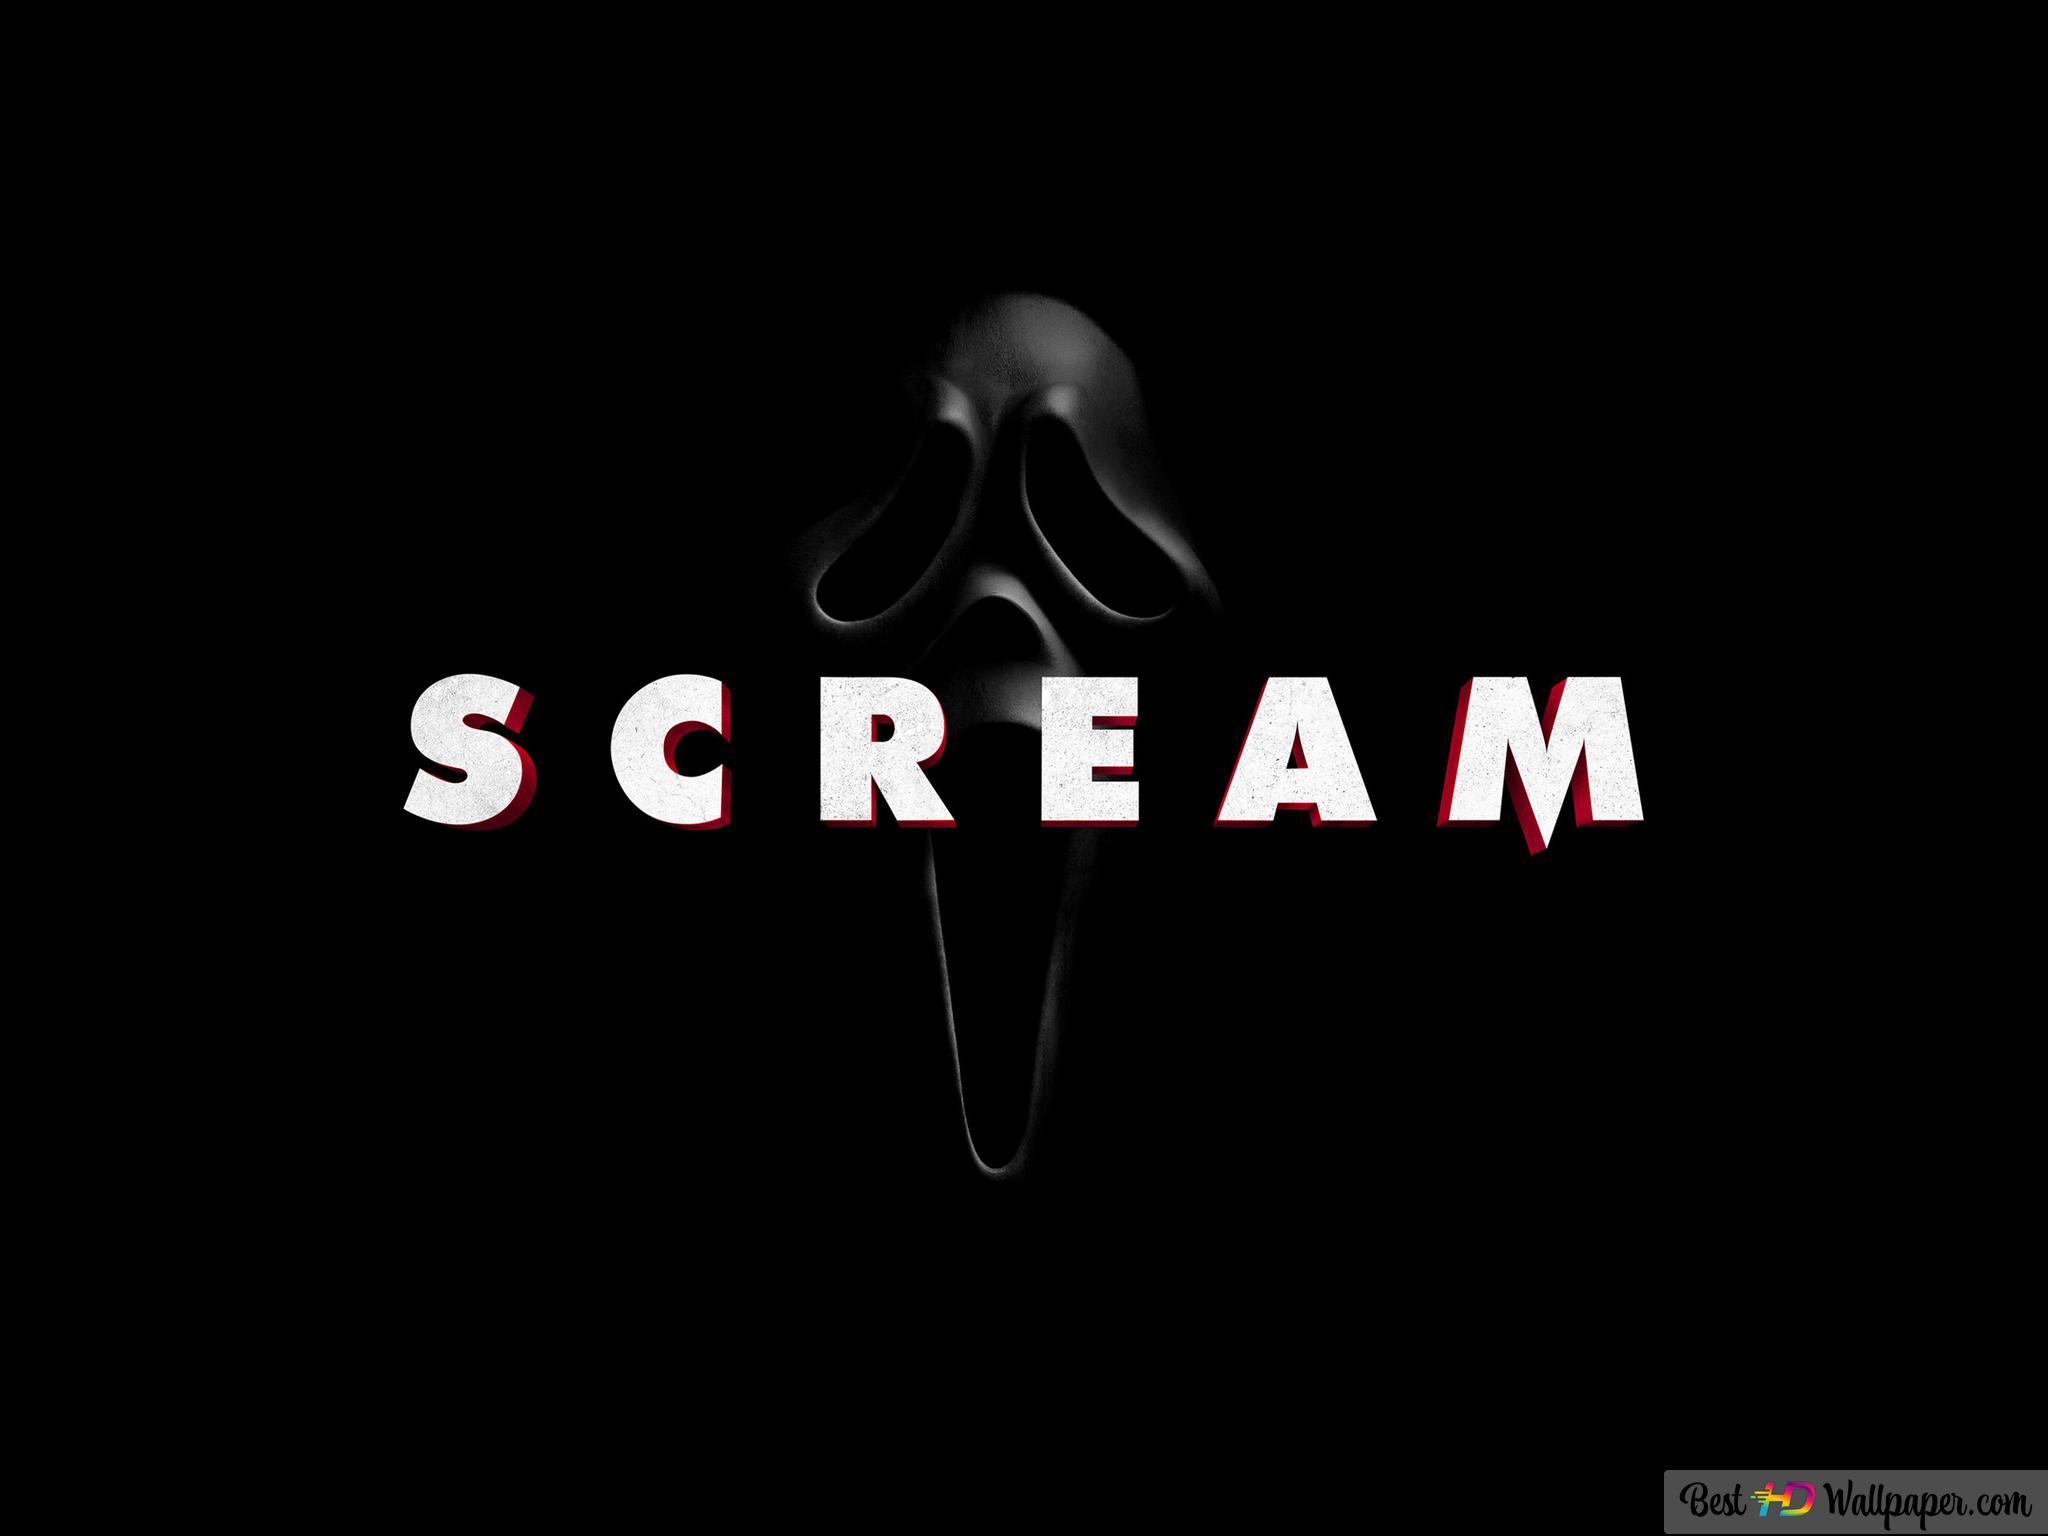 Scream movie soon HD wallpaper download Movies wallpapers